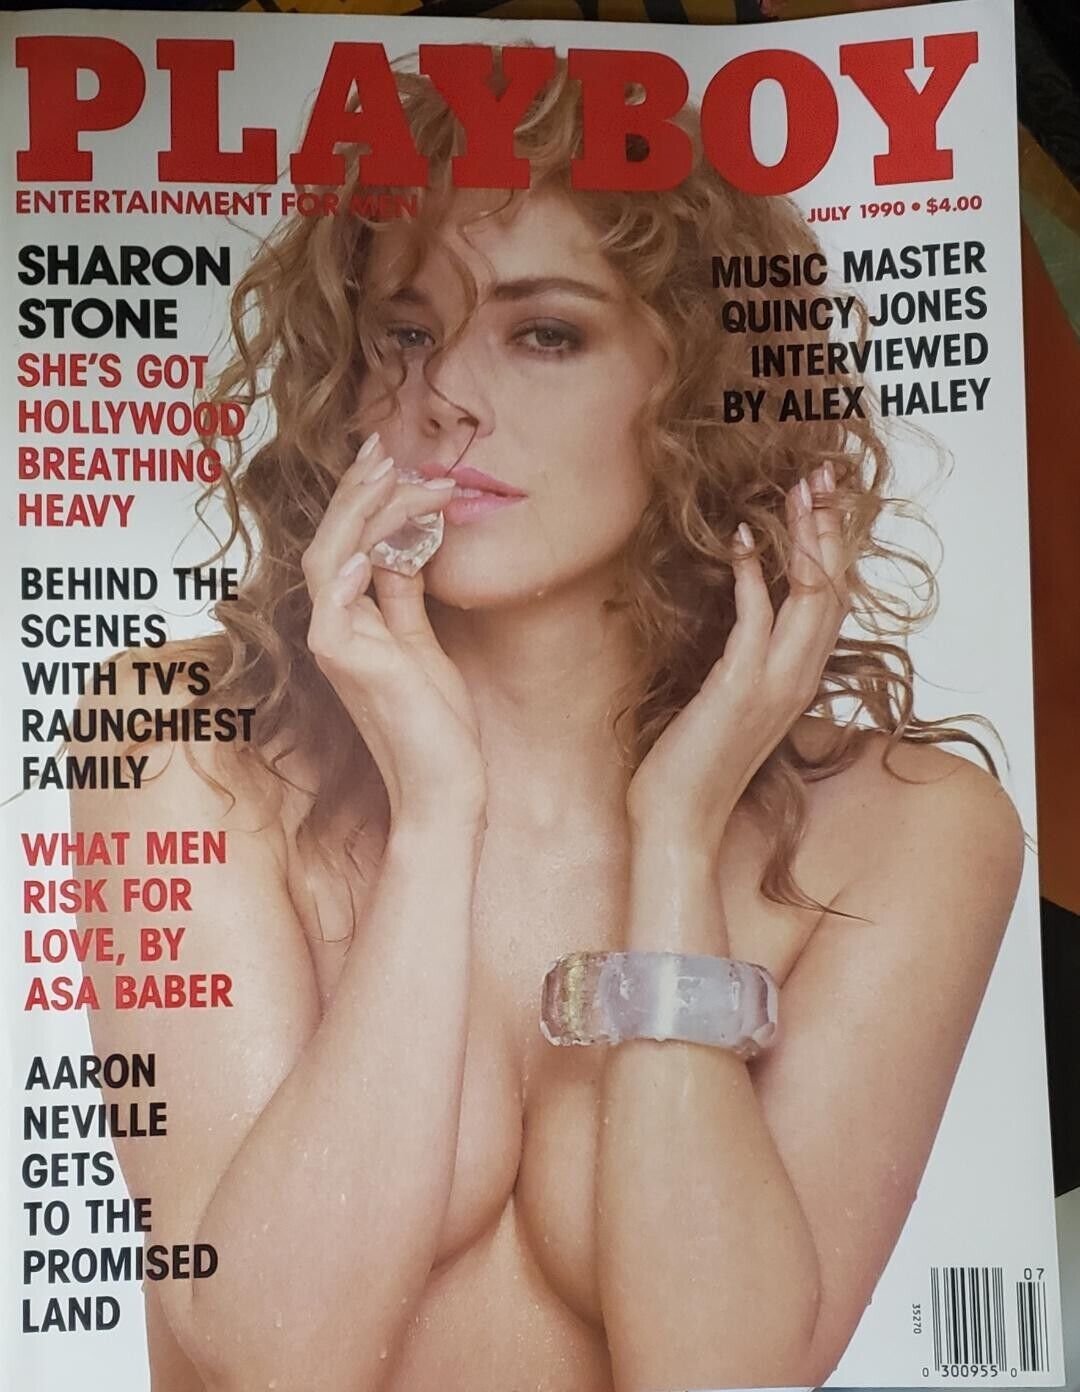 Vintage Playboy Magazine July 1990 w/centerfold - Sharon Stone Cover